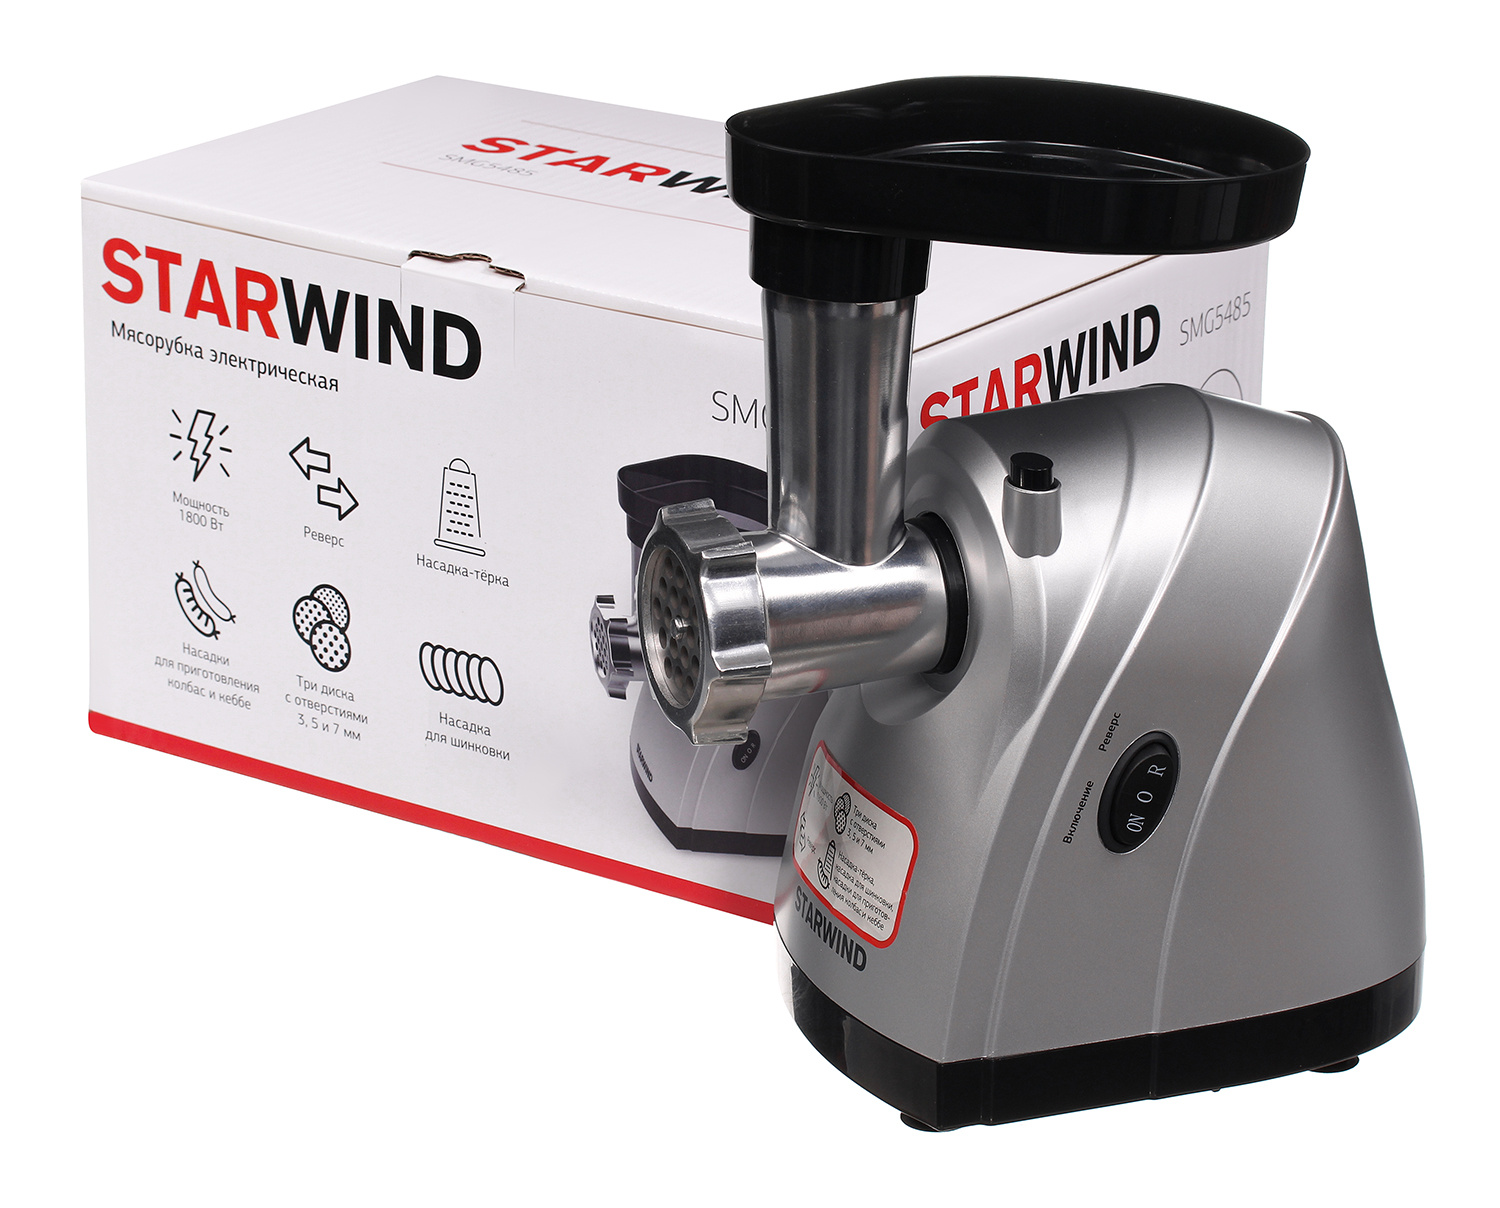 Мясорубка Starwind SMG5485 серебристый от магазина Старвинд